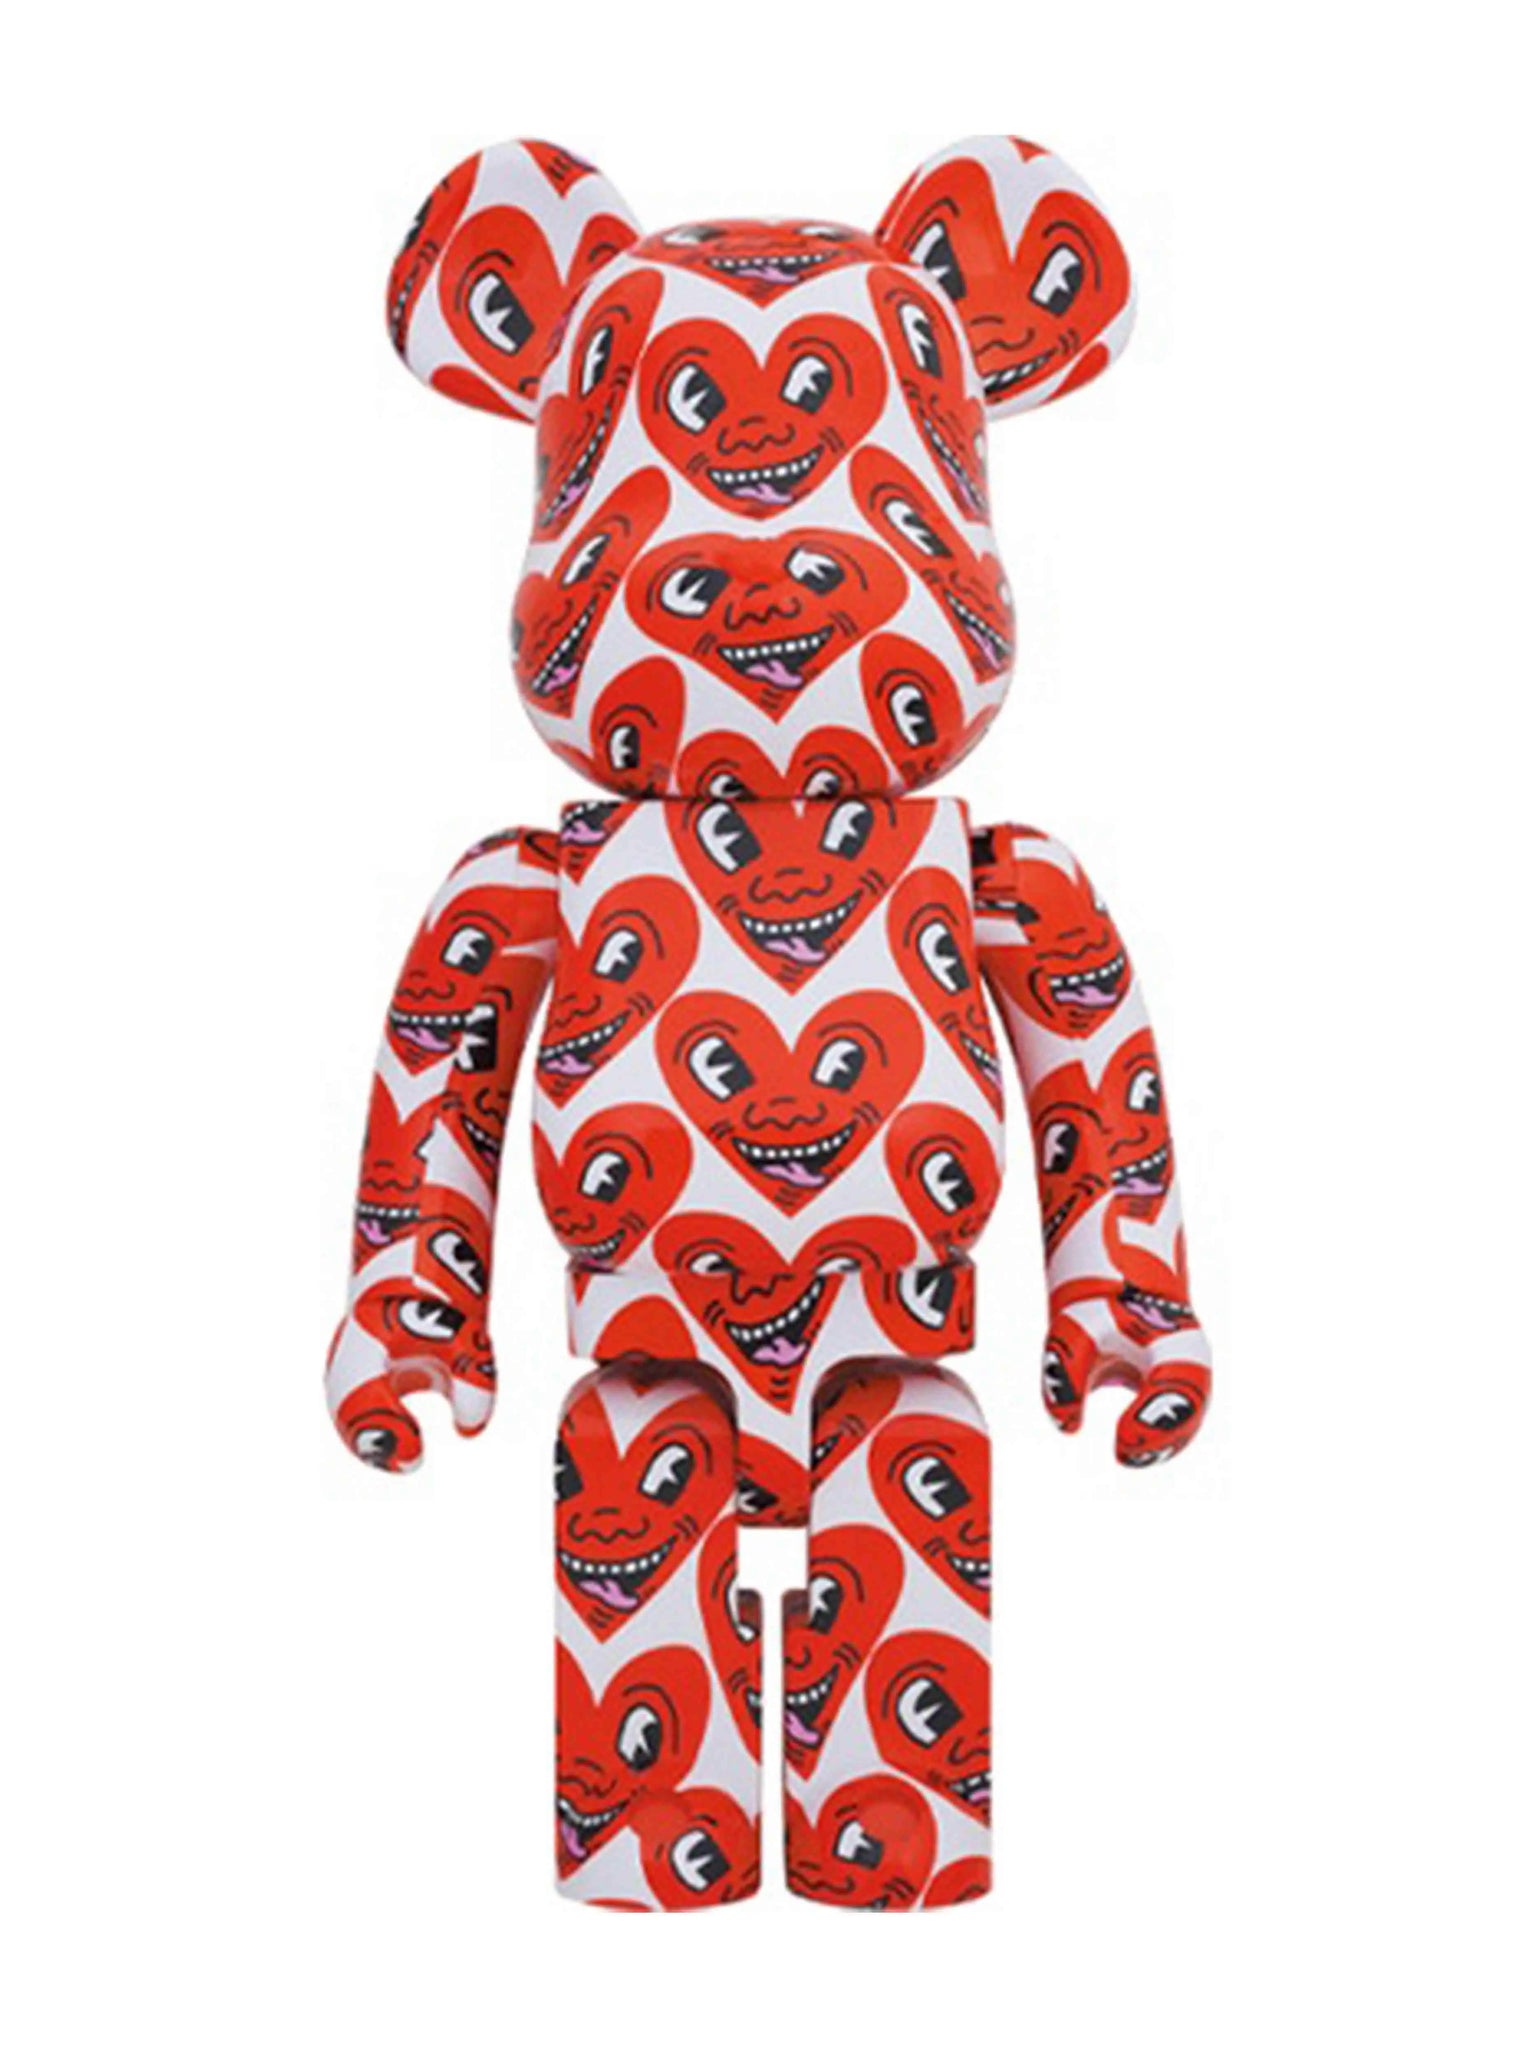 Medicom Toy Be@arbrick Keith Haring #6 1000% Medicom Toy